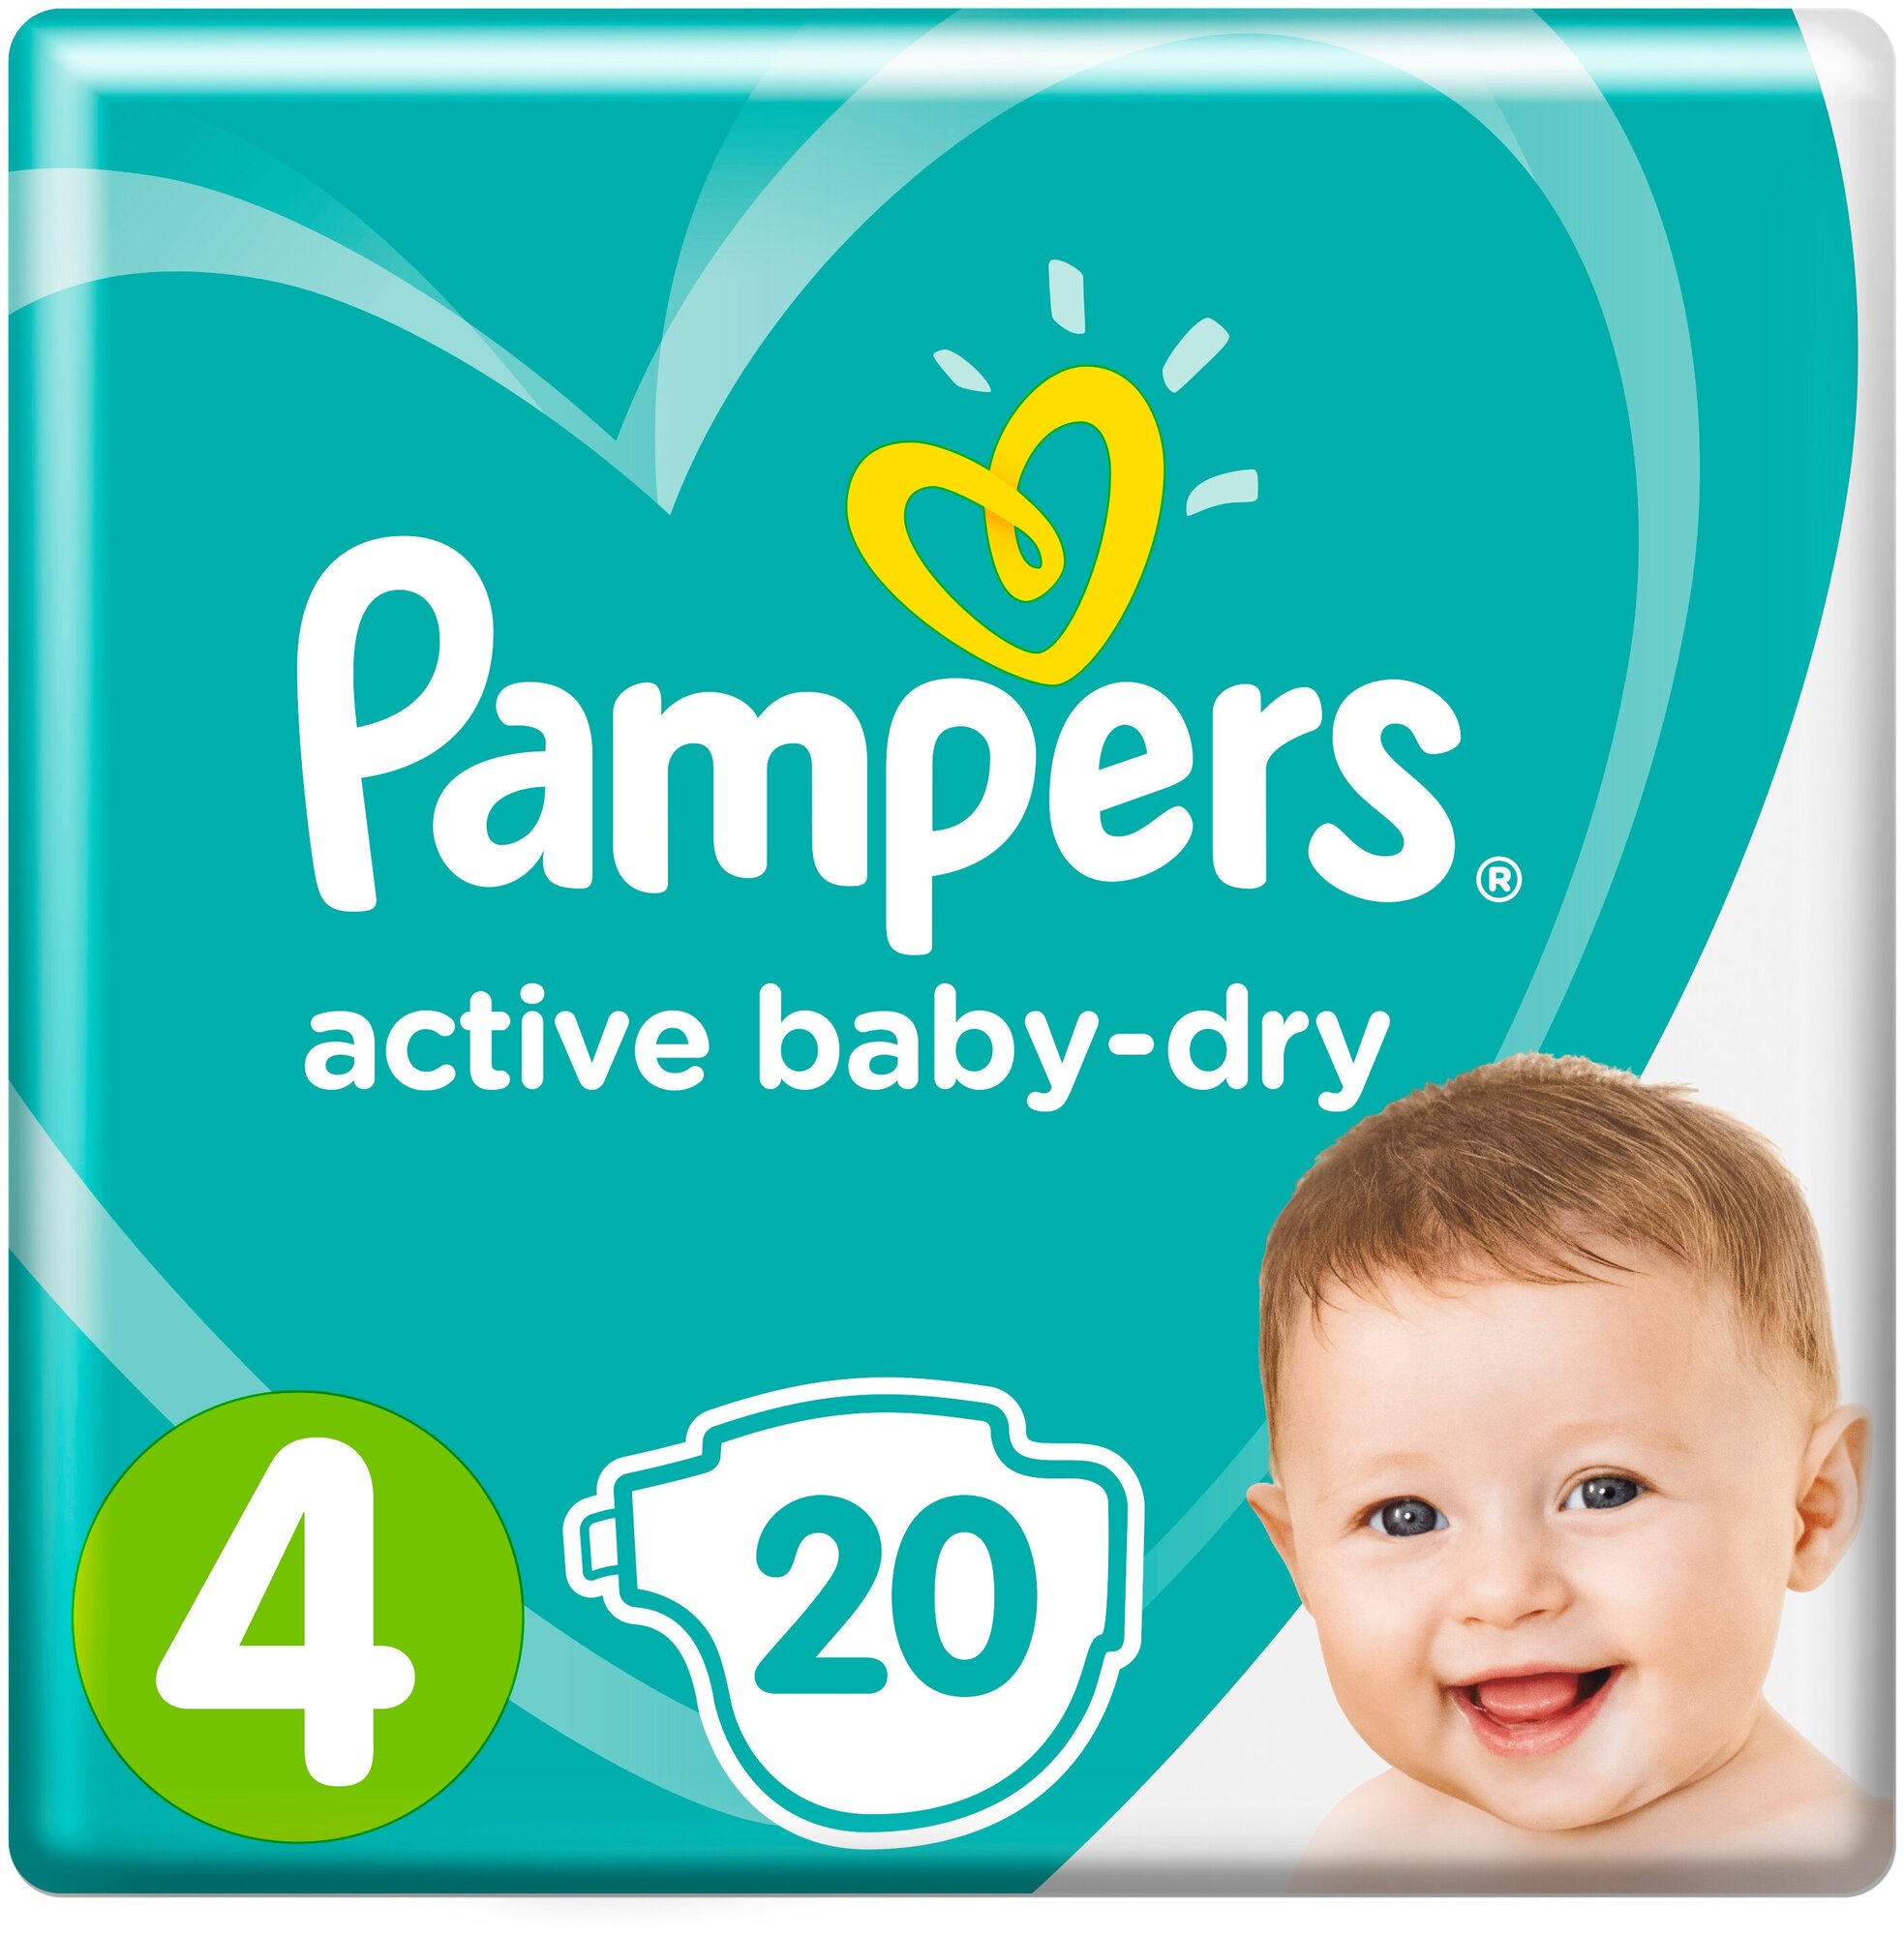 Подгузники Pampers Active Baby-Dry 9–14 кг, размер 4, 70 шт.